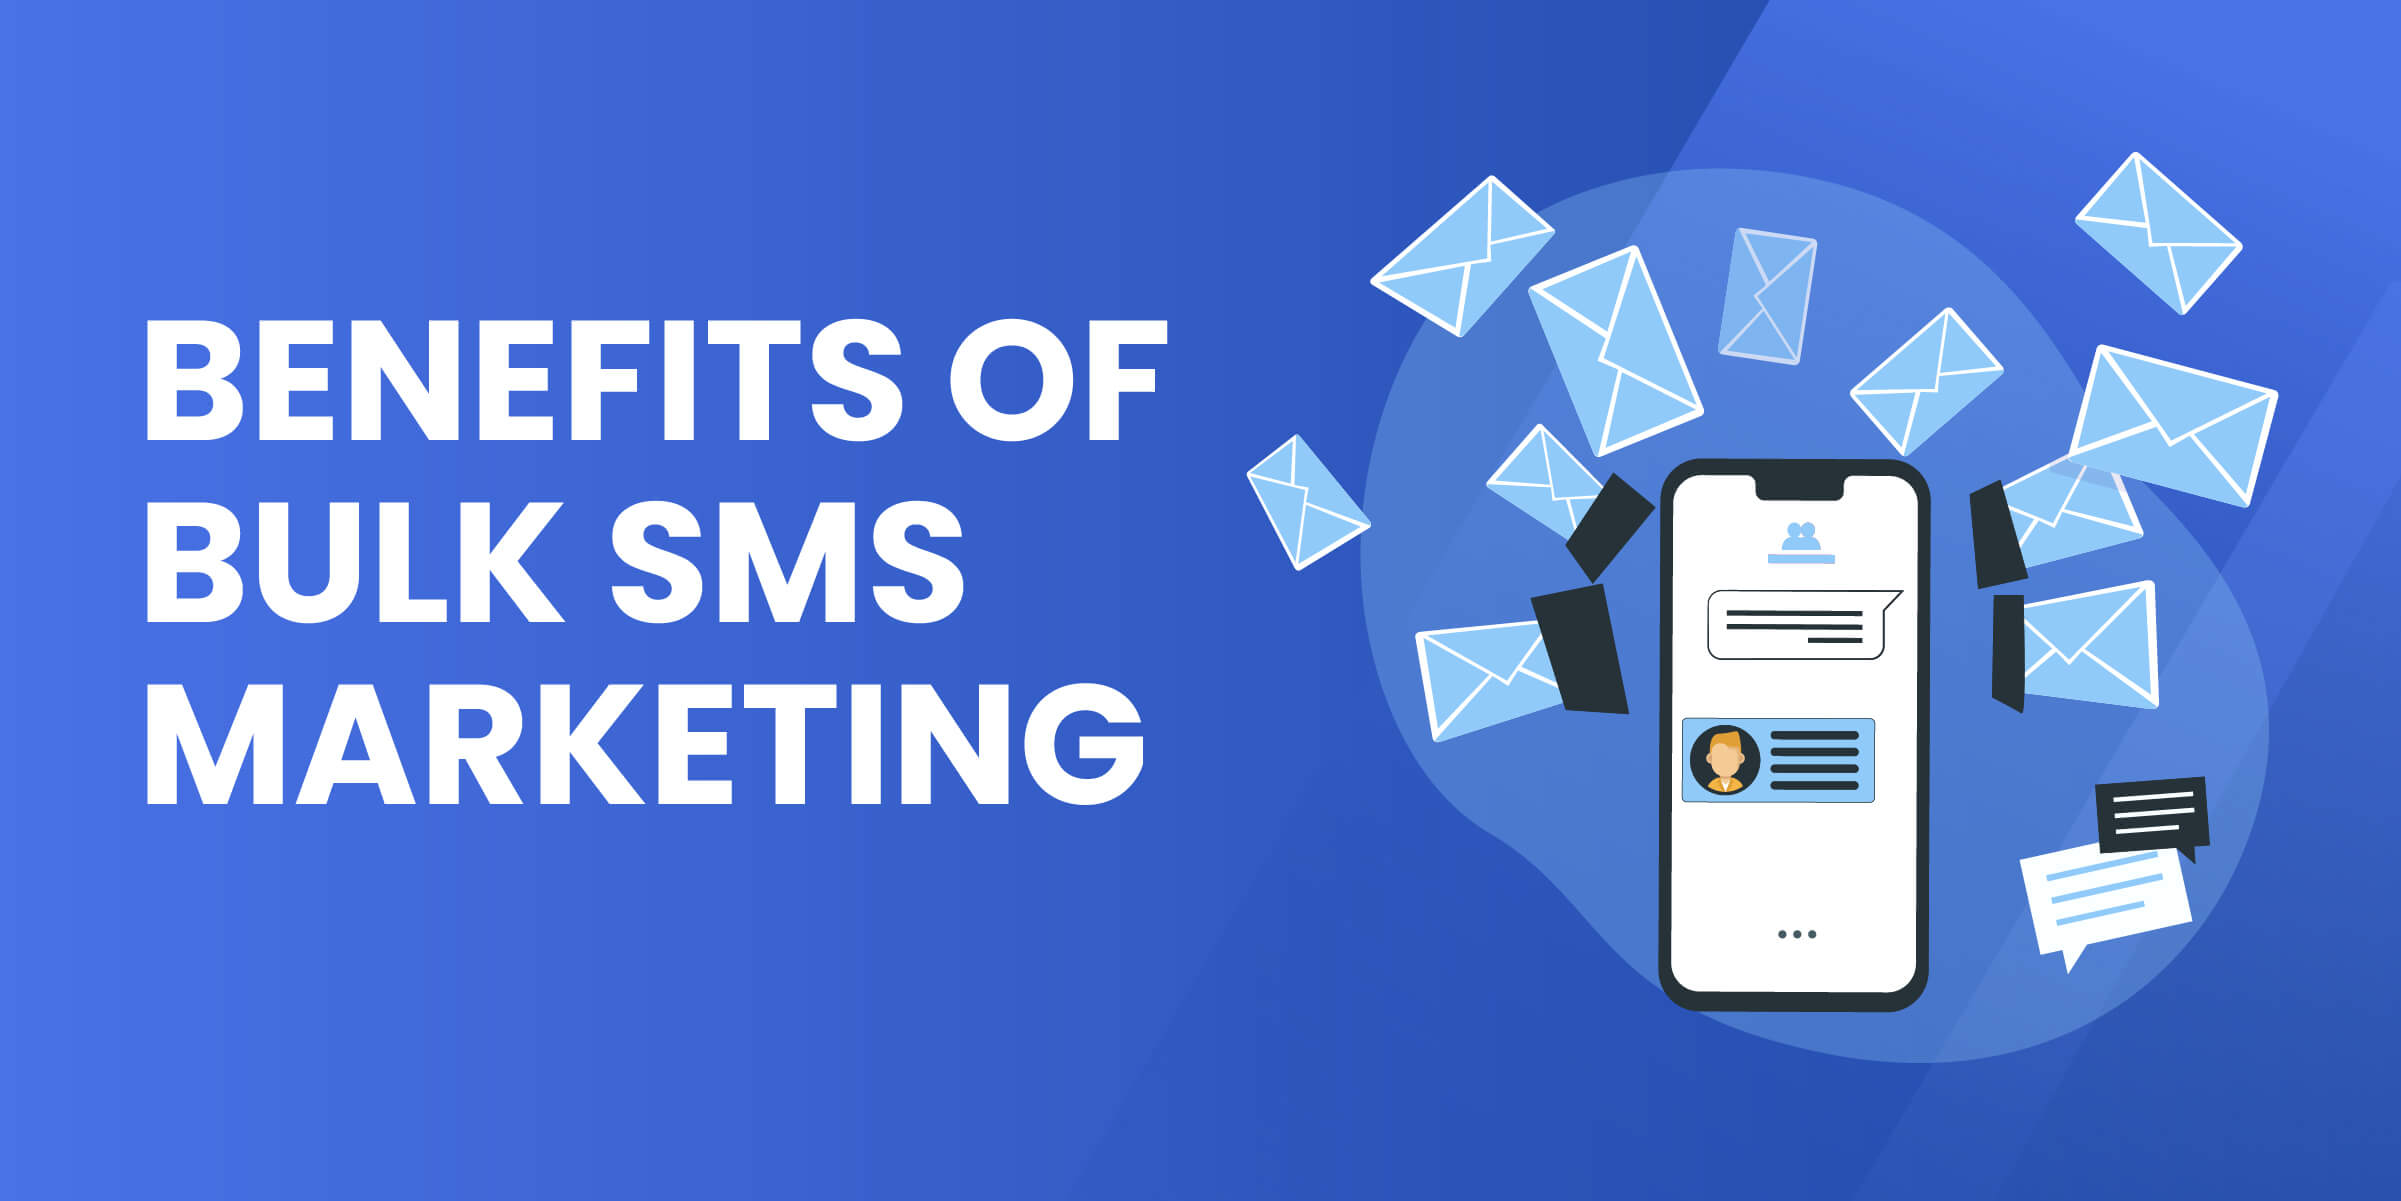 Benefits of Bulk SMS Marketing